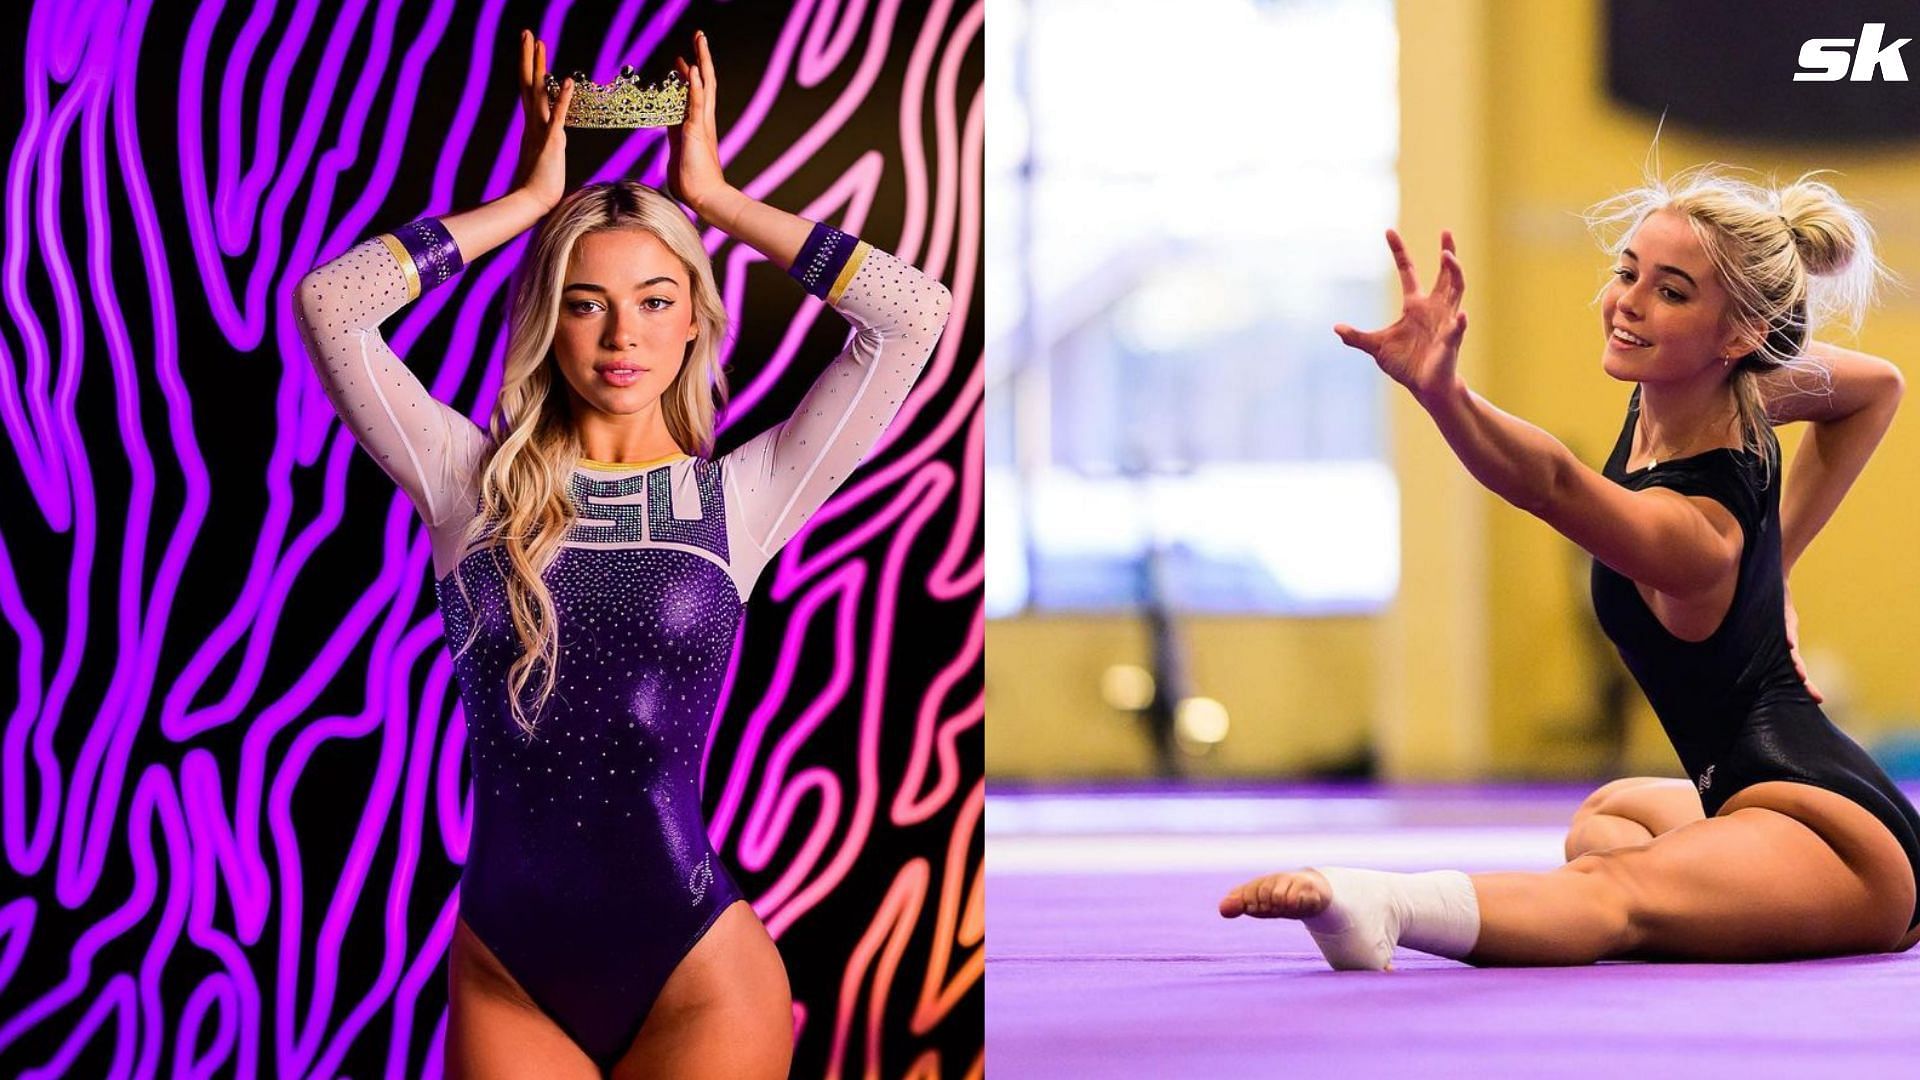 Olivia Dunne is a LSU gymnast and a social media sensation